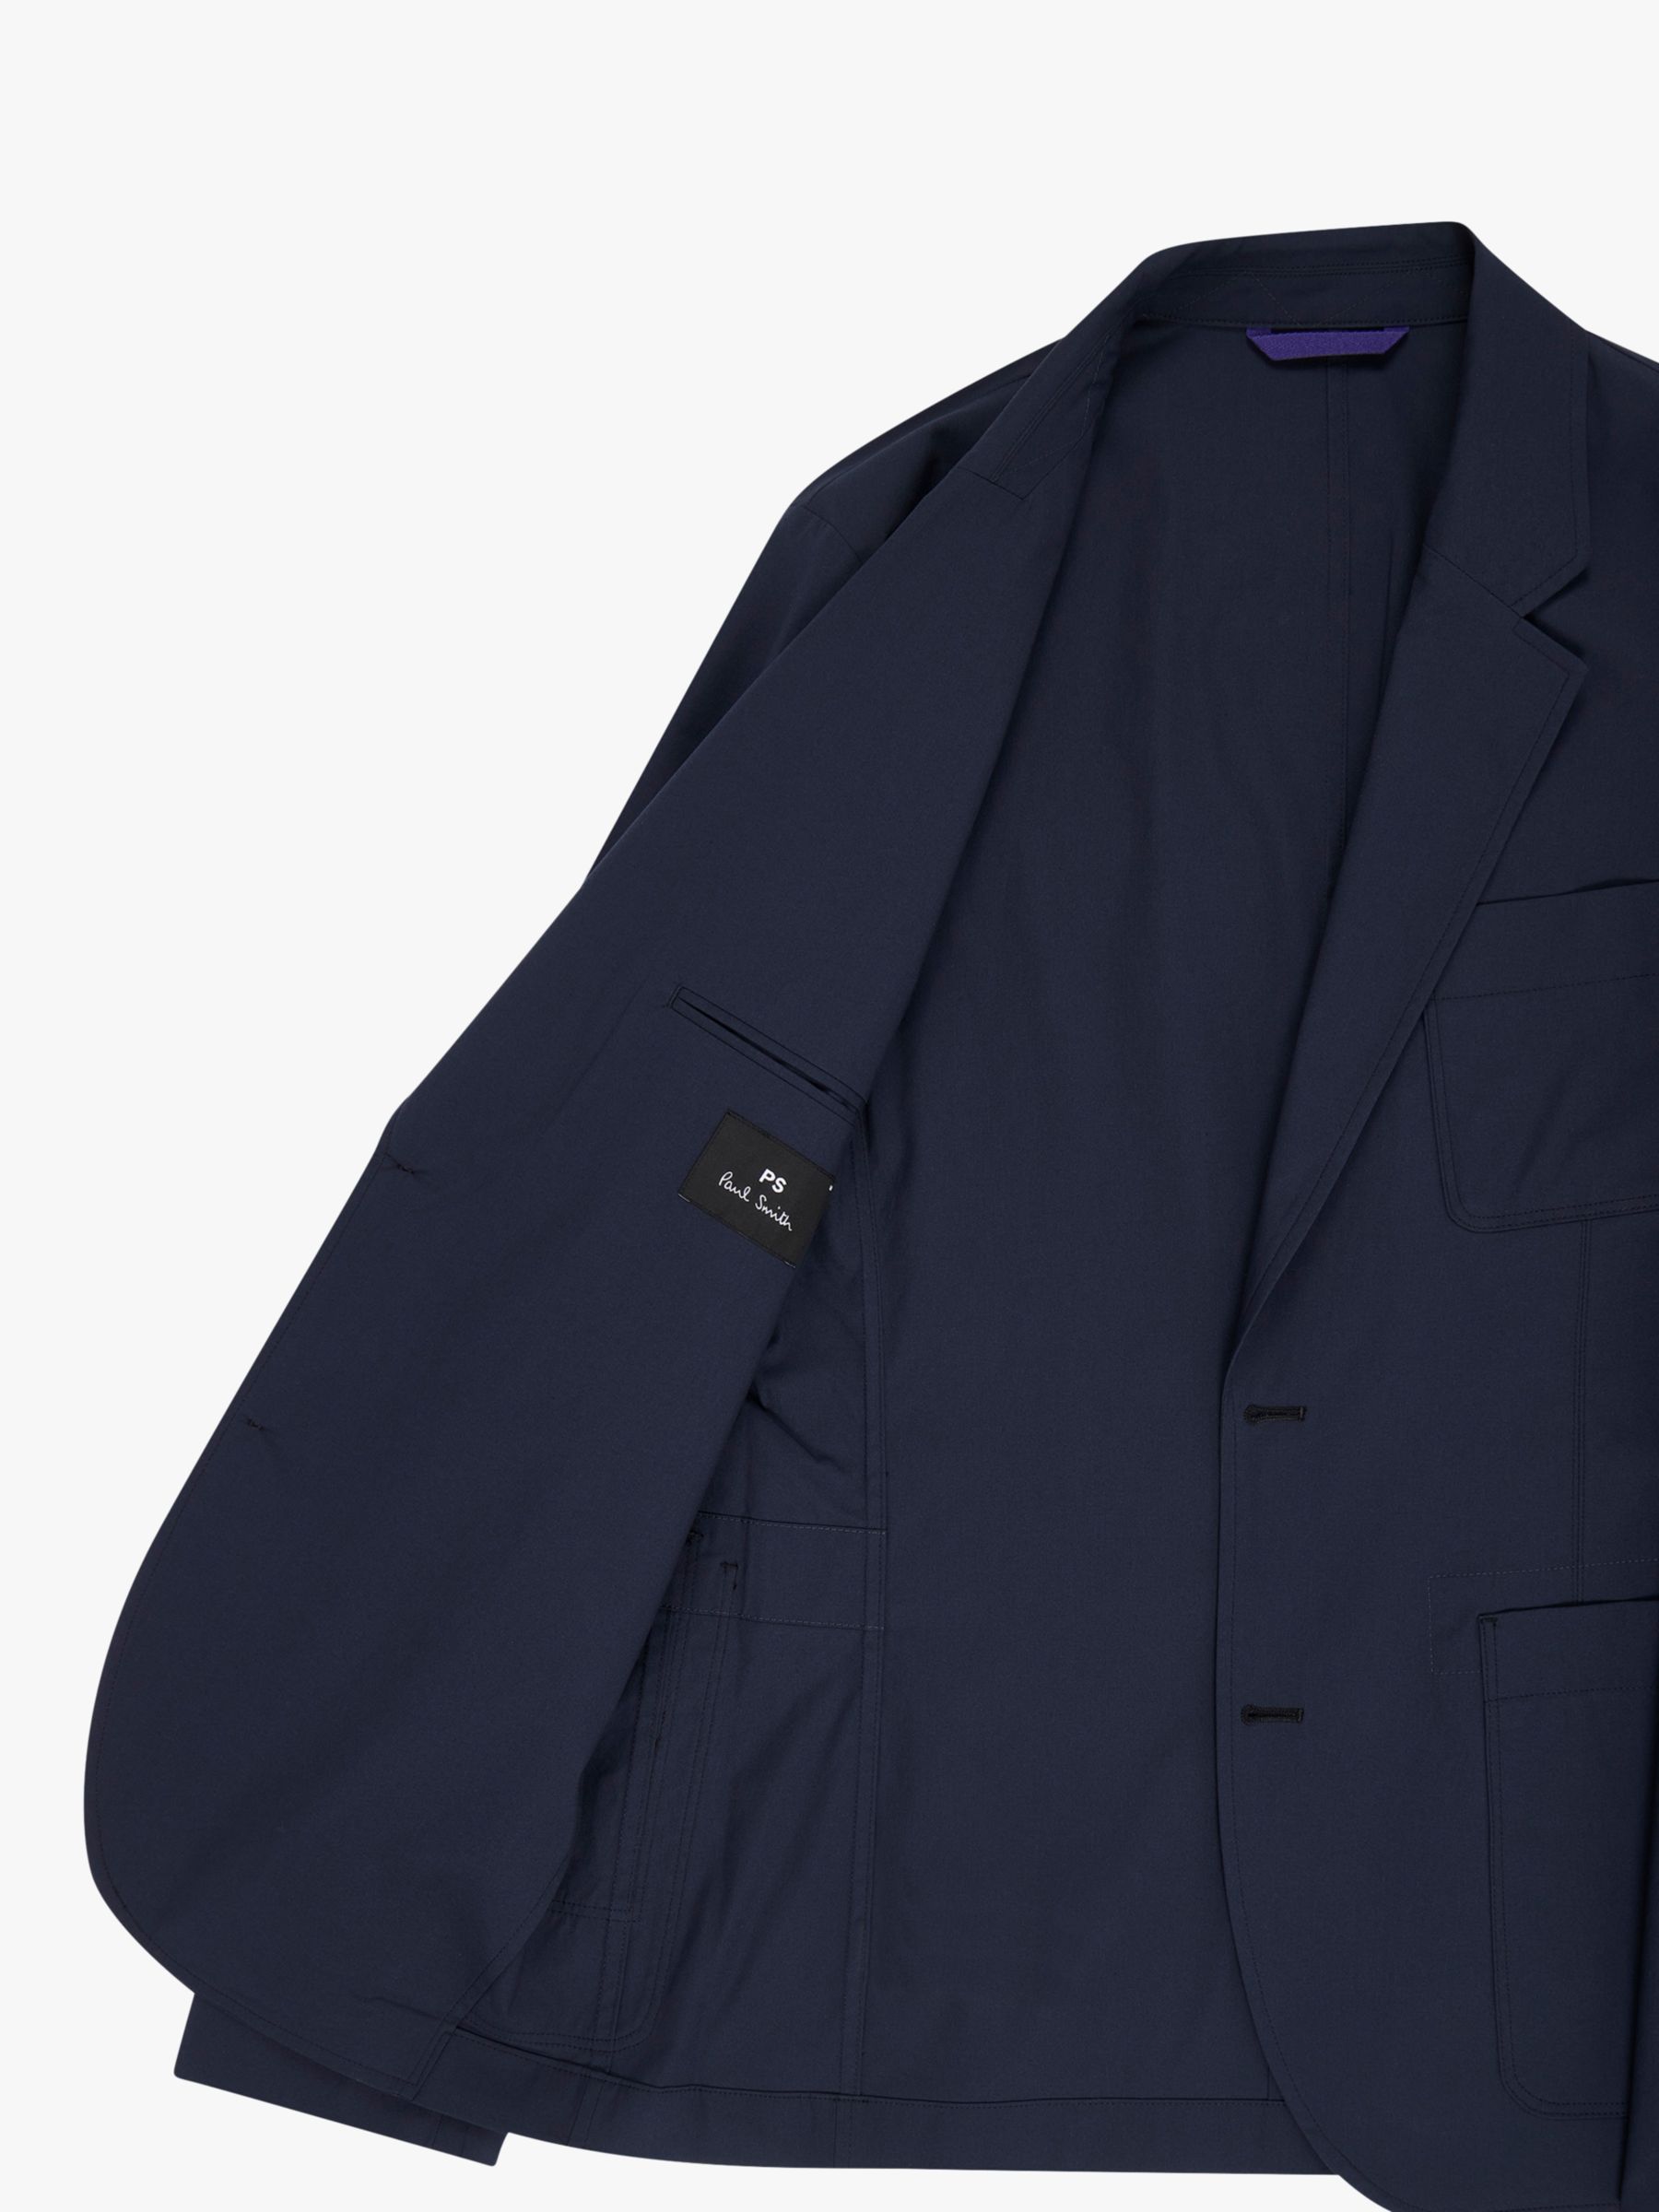 Buy PS Paul Smith Organic Cotton Blend Suit Jacket Online at johnlewis.com